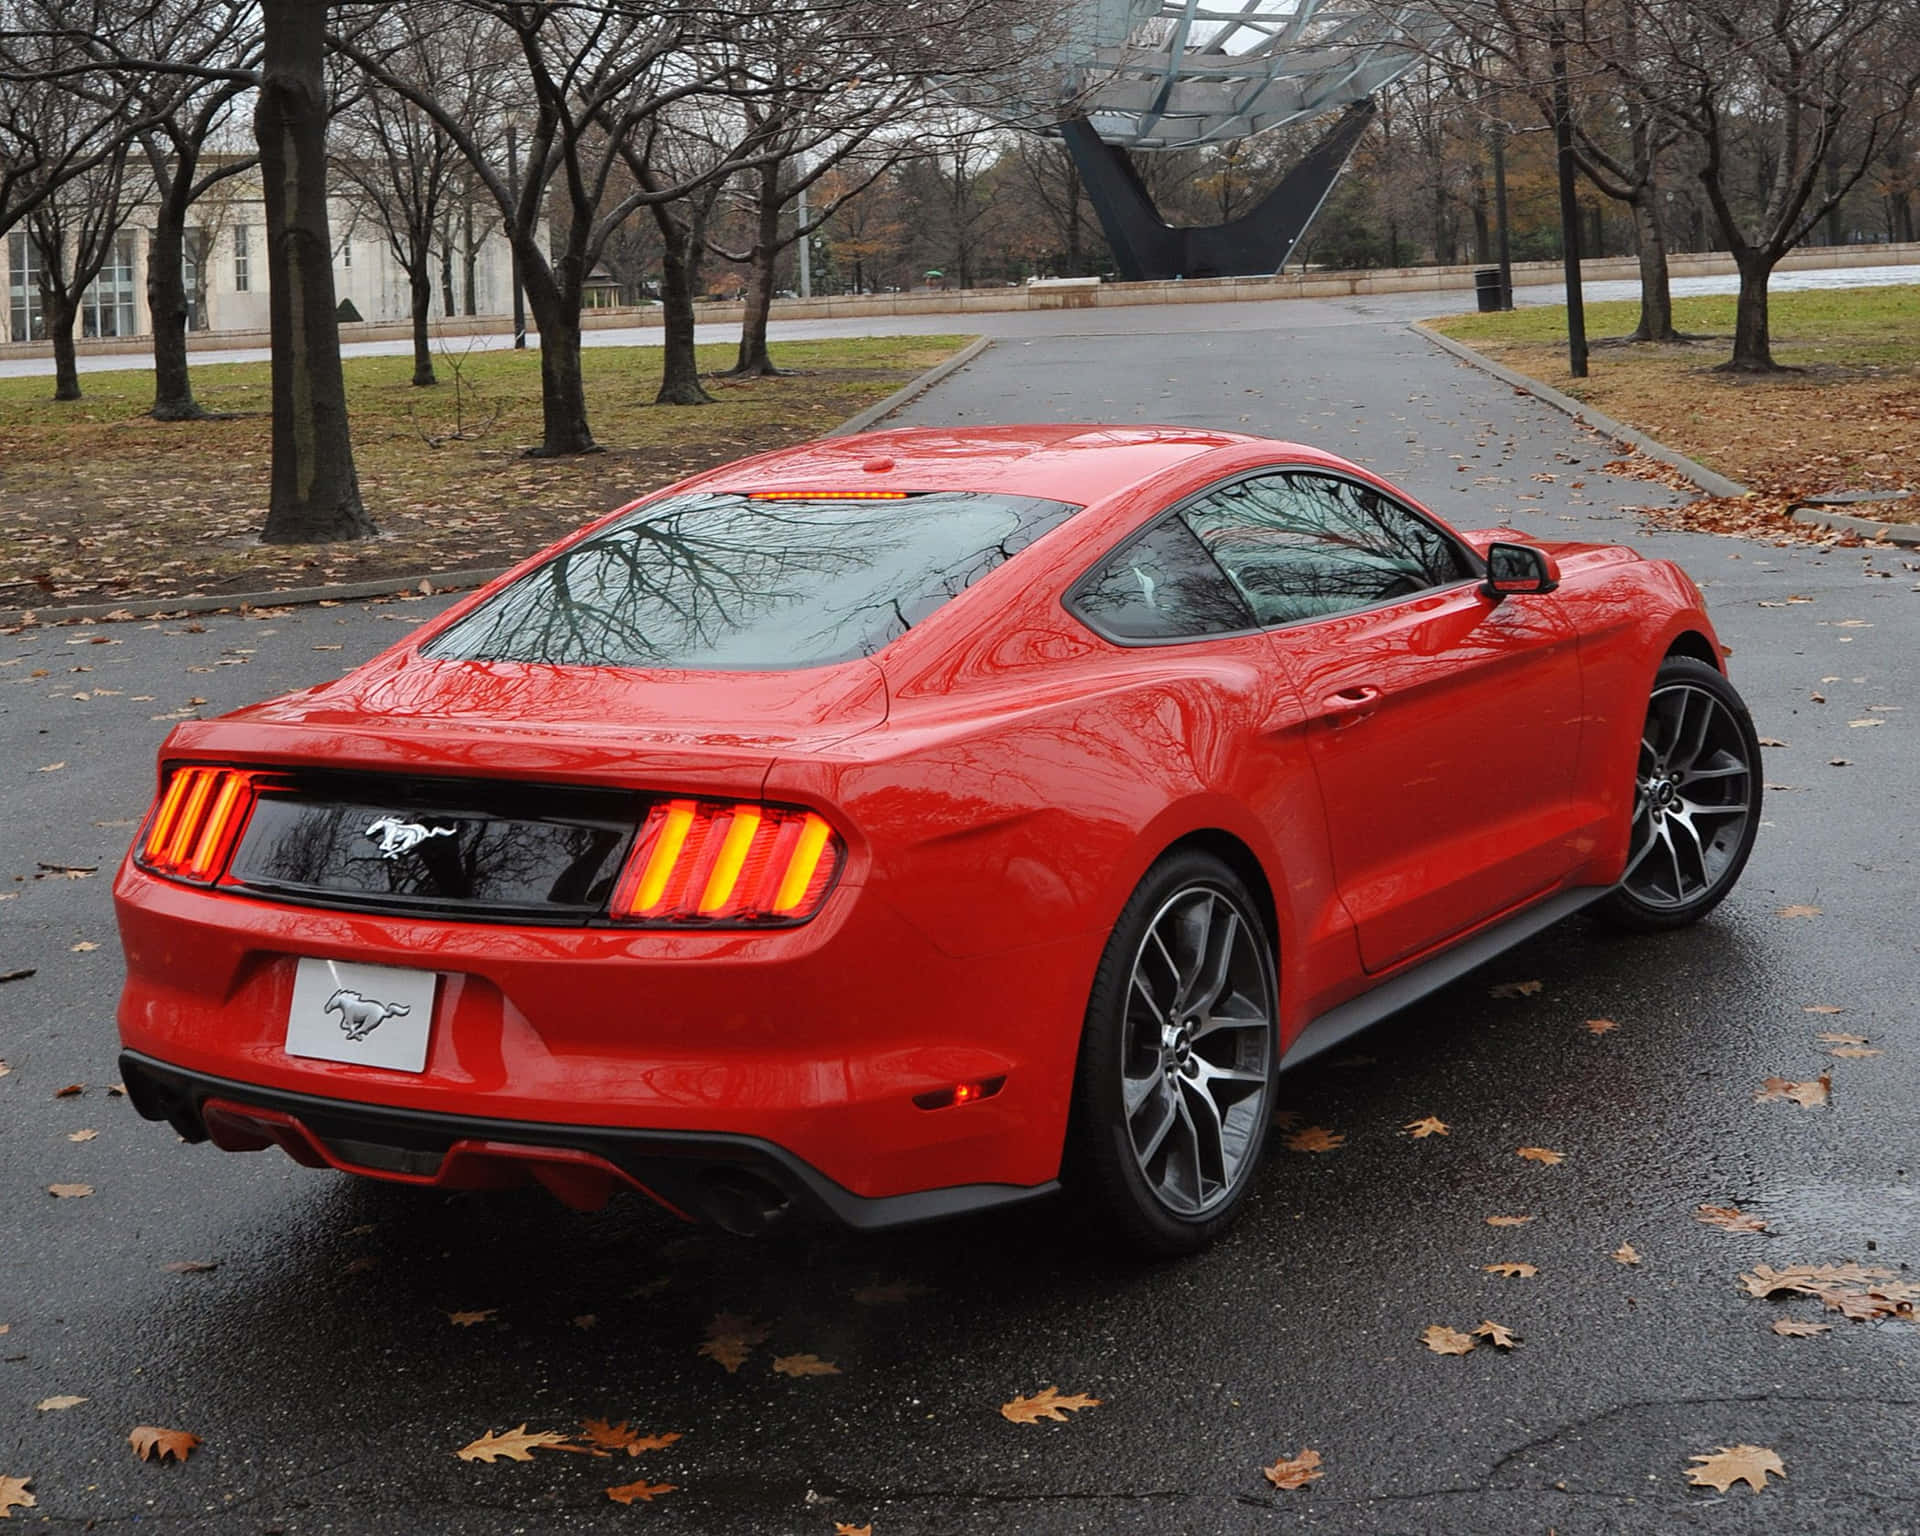 Продажа мустанг. Ford Mustang 2015 красный. Форд Мустанг 2015. Ford Mustang gt 2015 красный. Новый Форд Мустанг 2015.